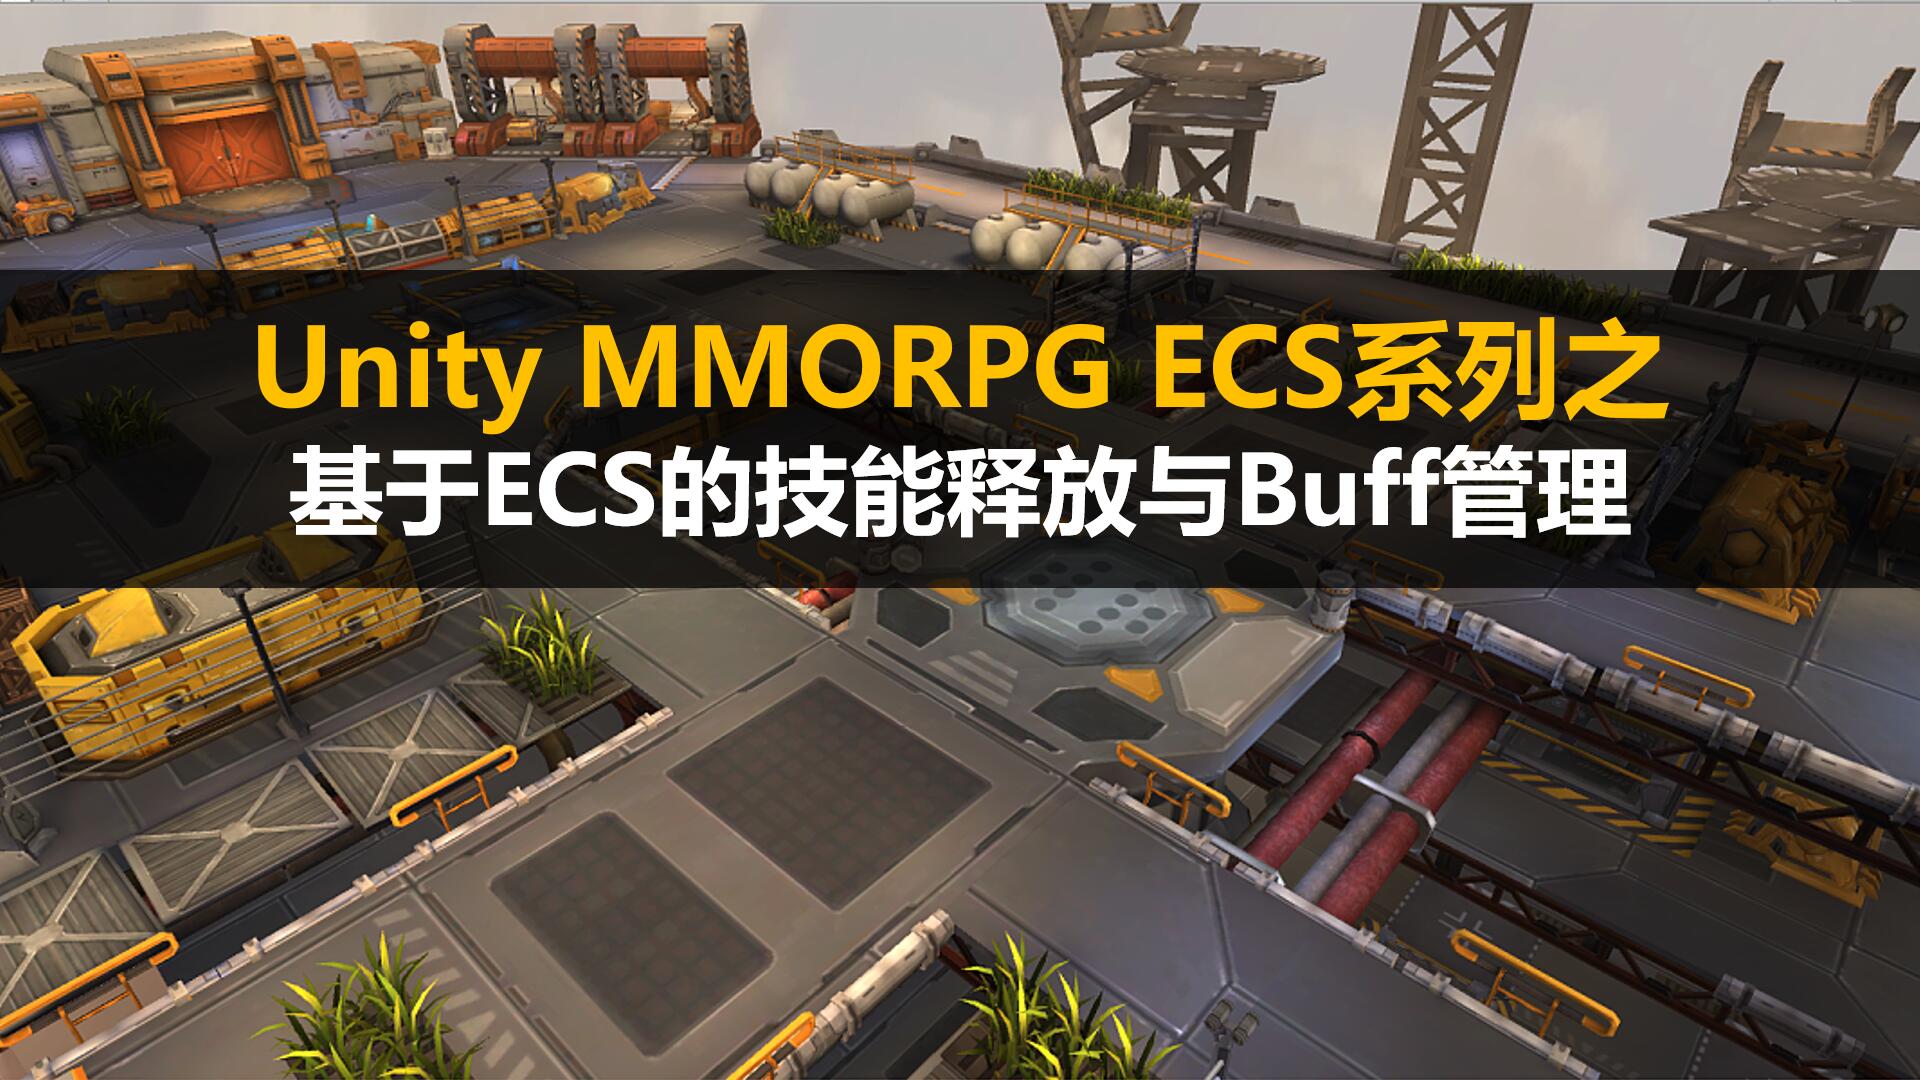 MMORPG技术分享: 基于ECS的技能释放与Buff管理